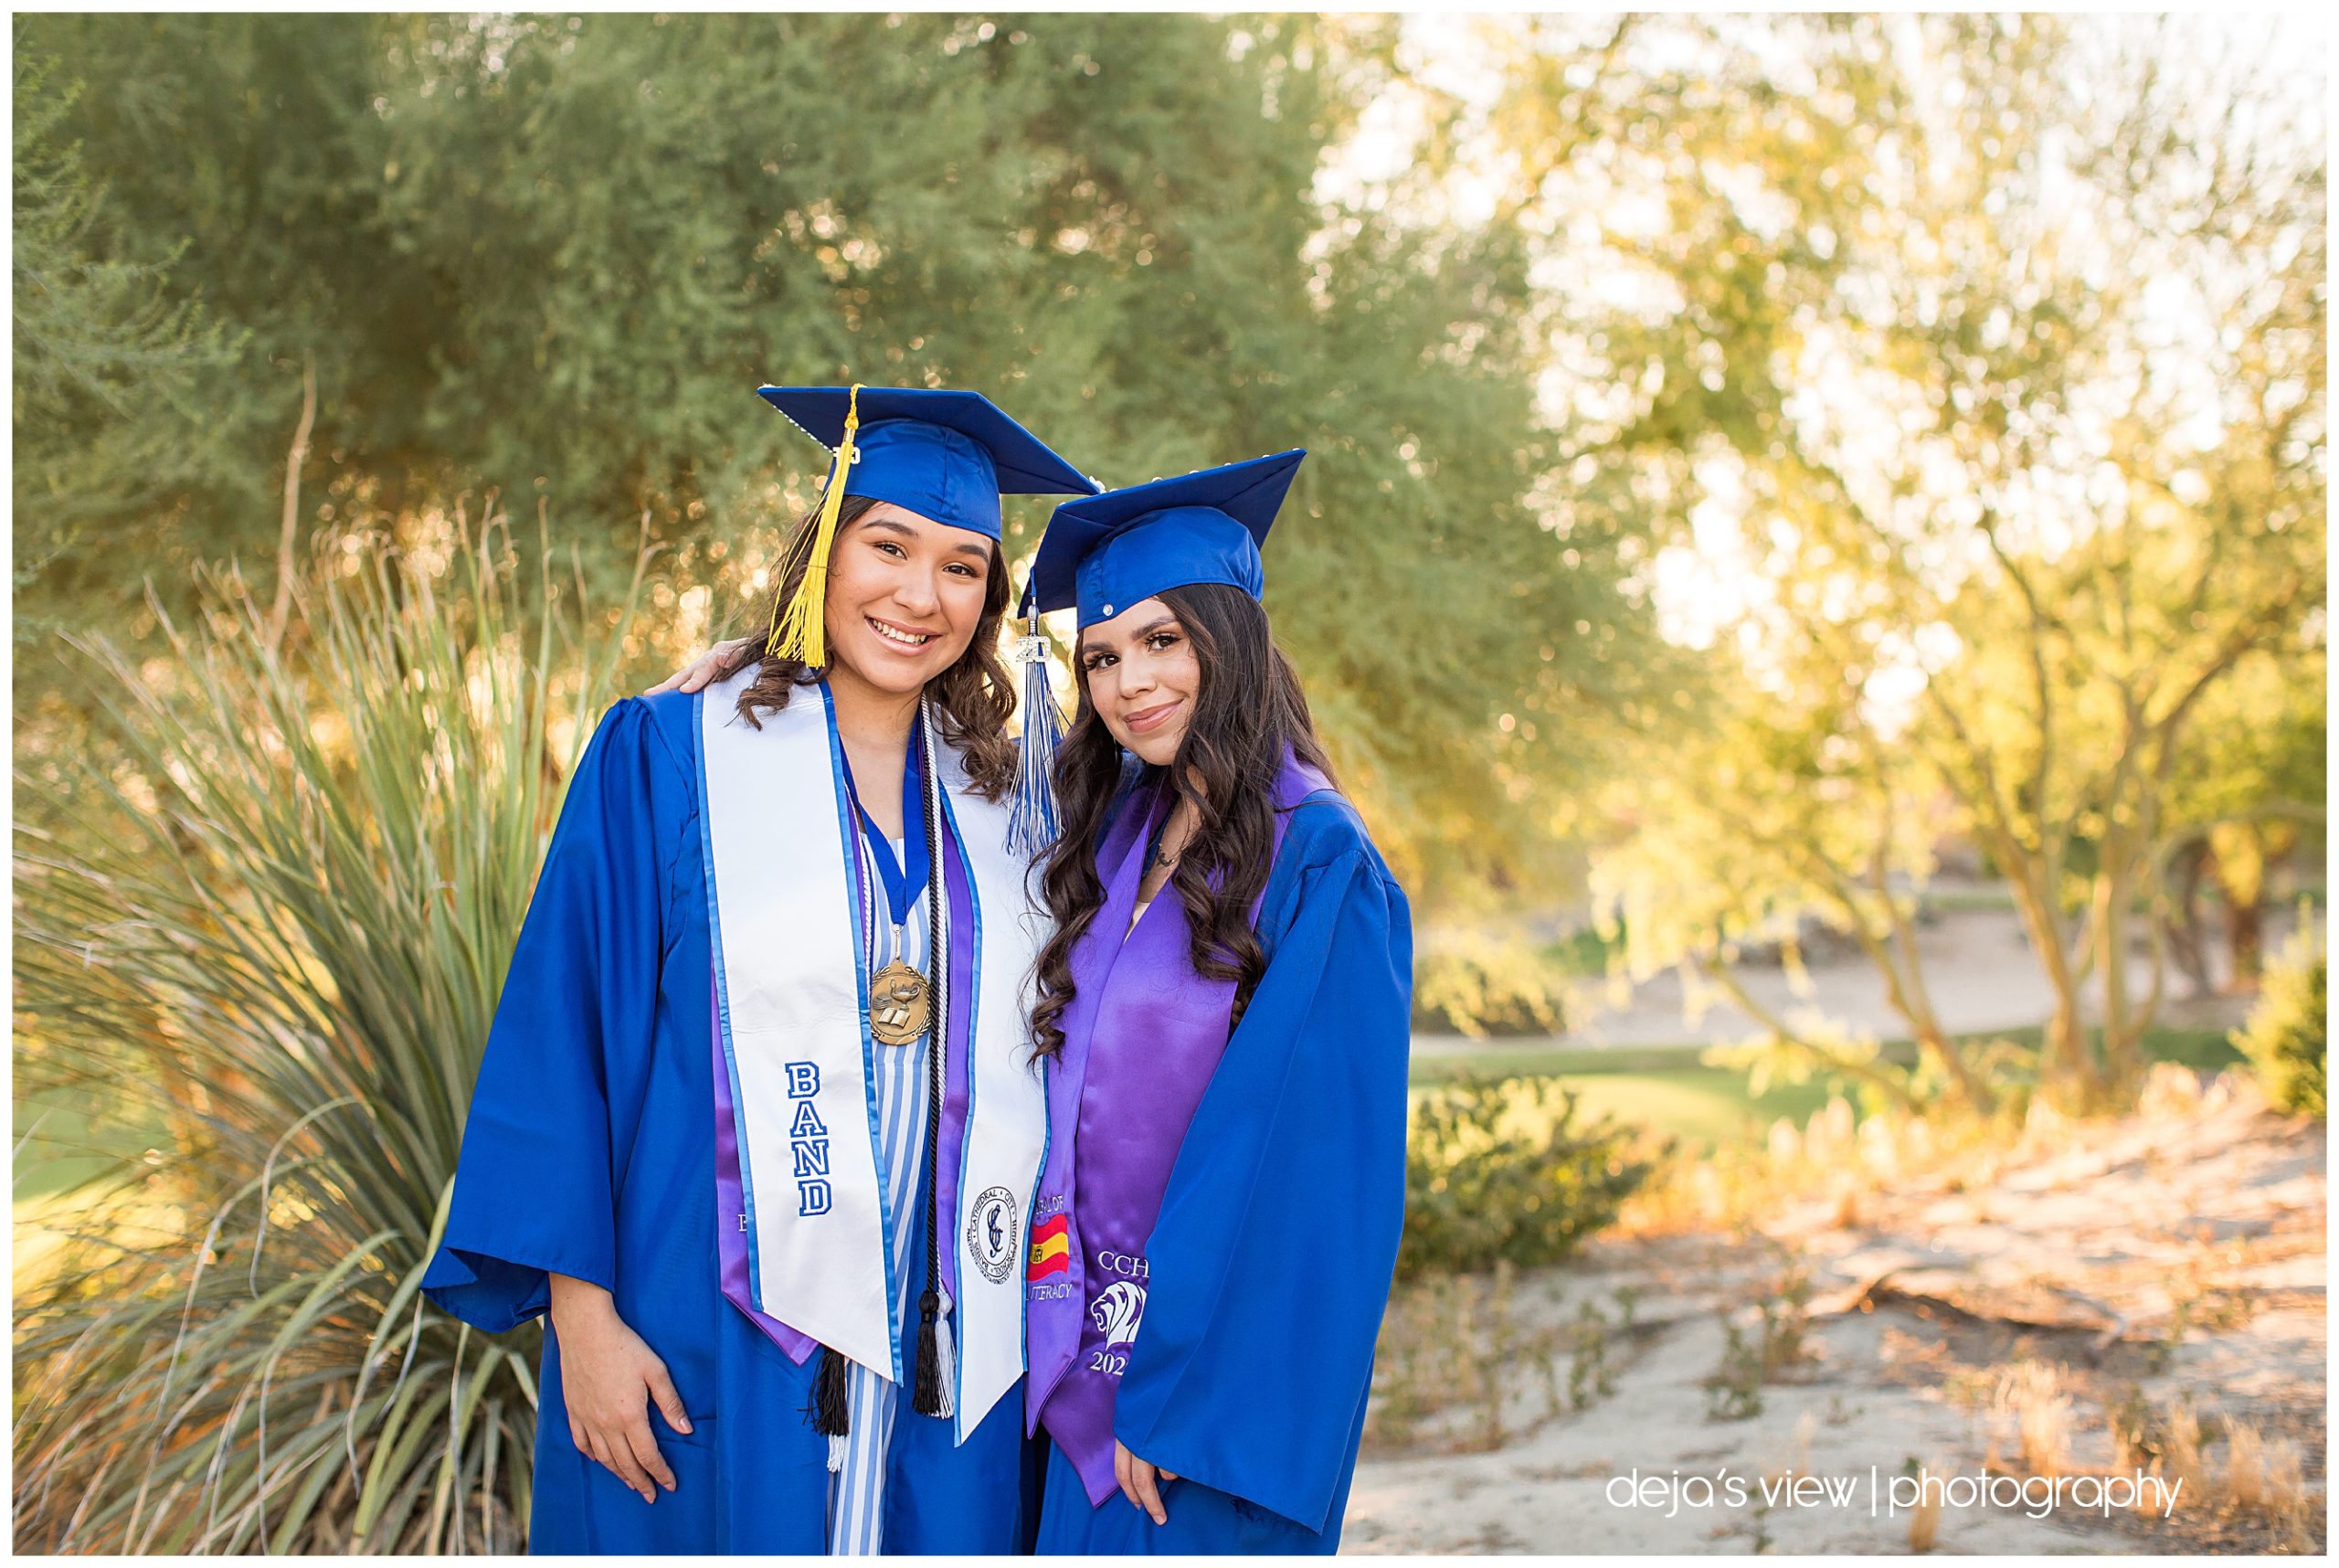 Desert Willow Graduation photos